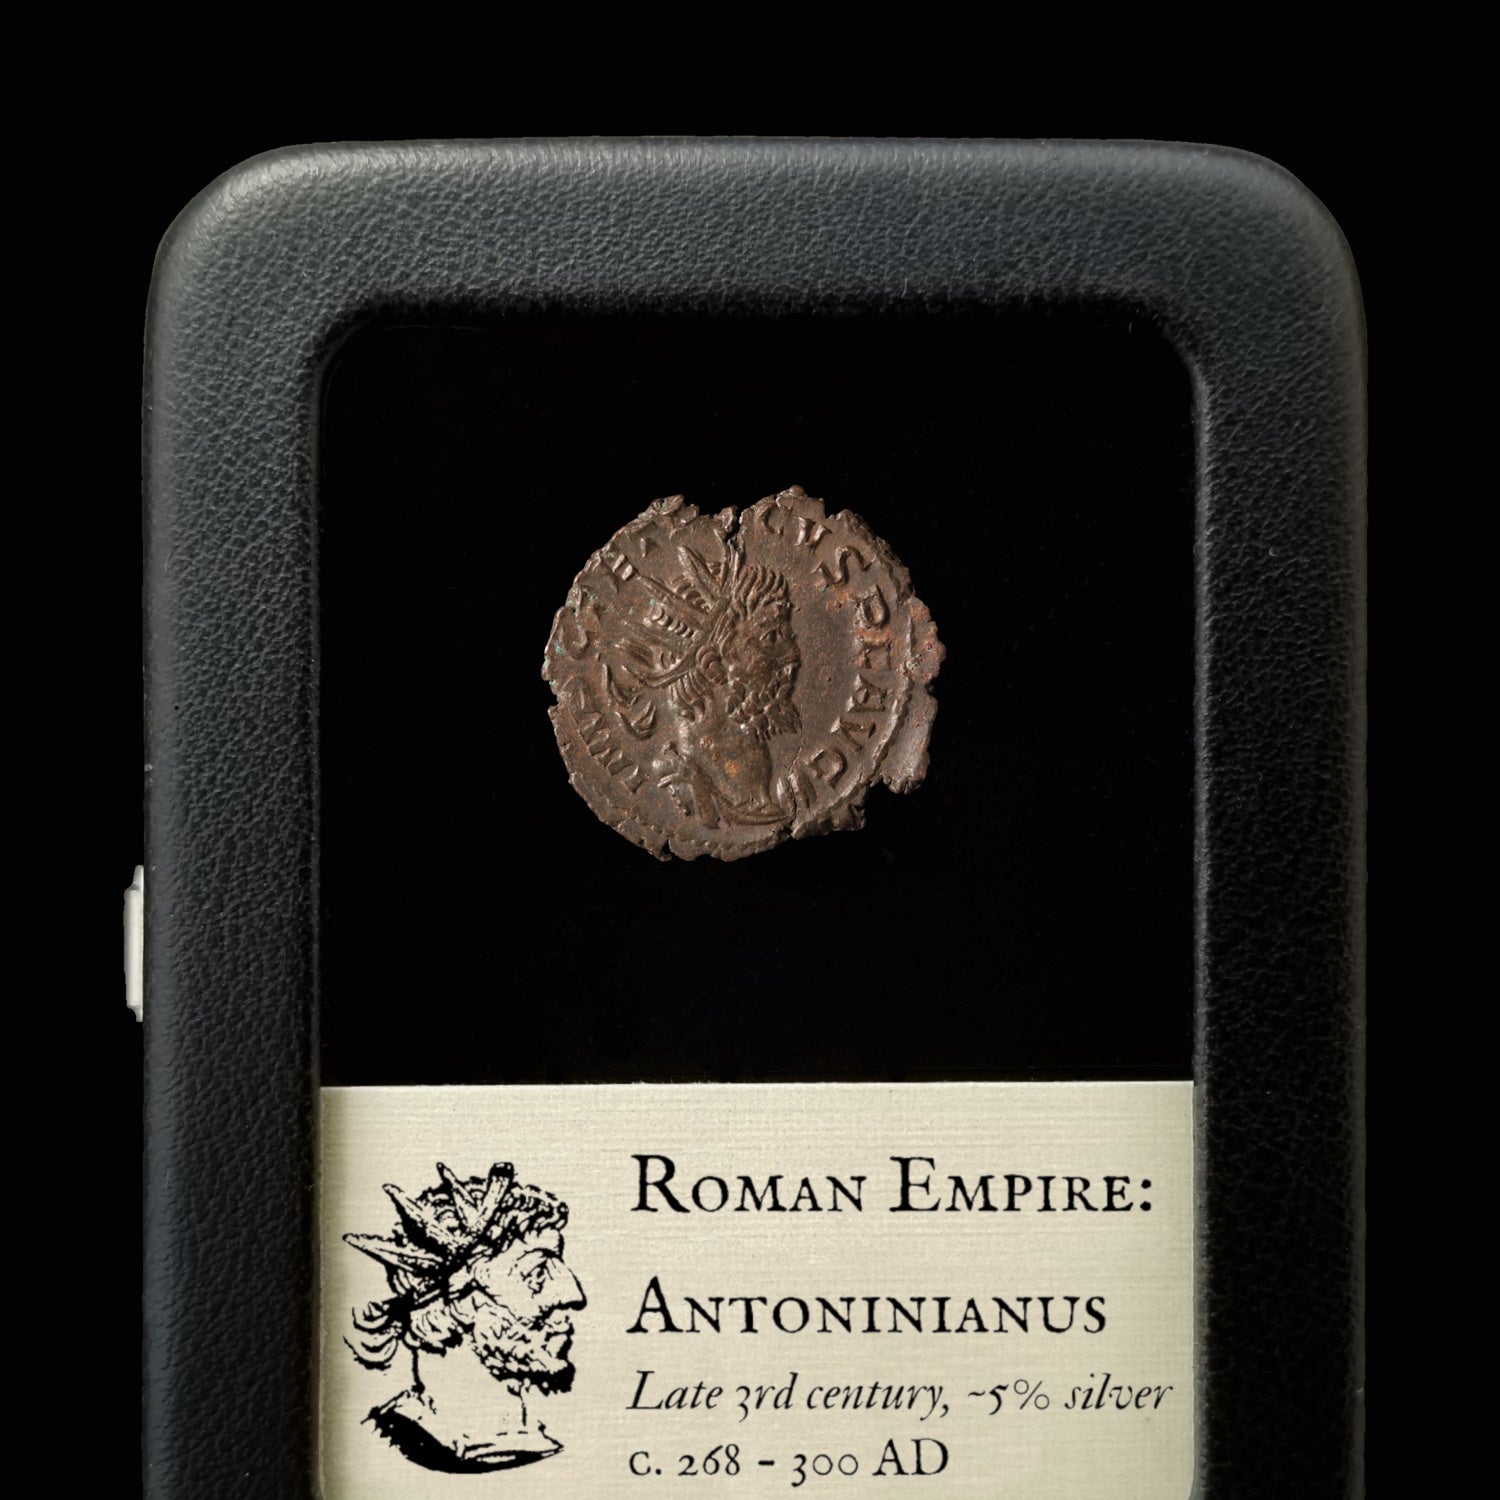 Rome, Late 3rd Cent. Antoninianus (5% silver) - c. 268 to 300 CE - Roman Empire